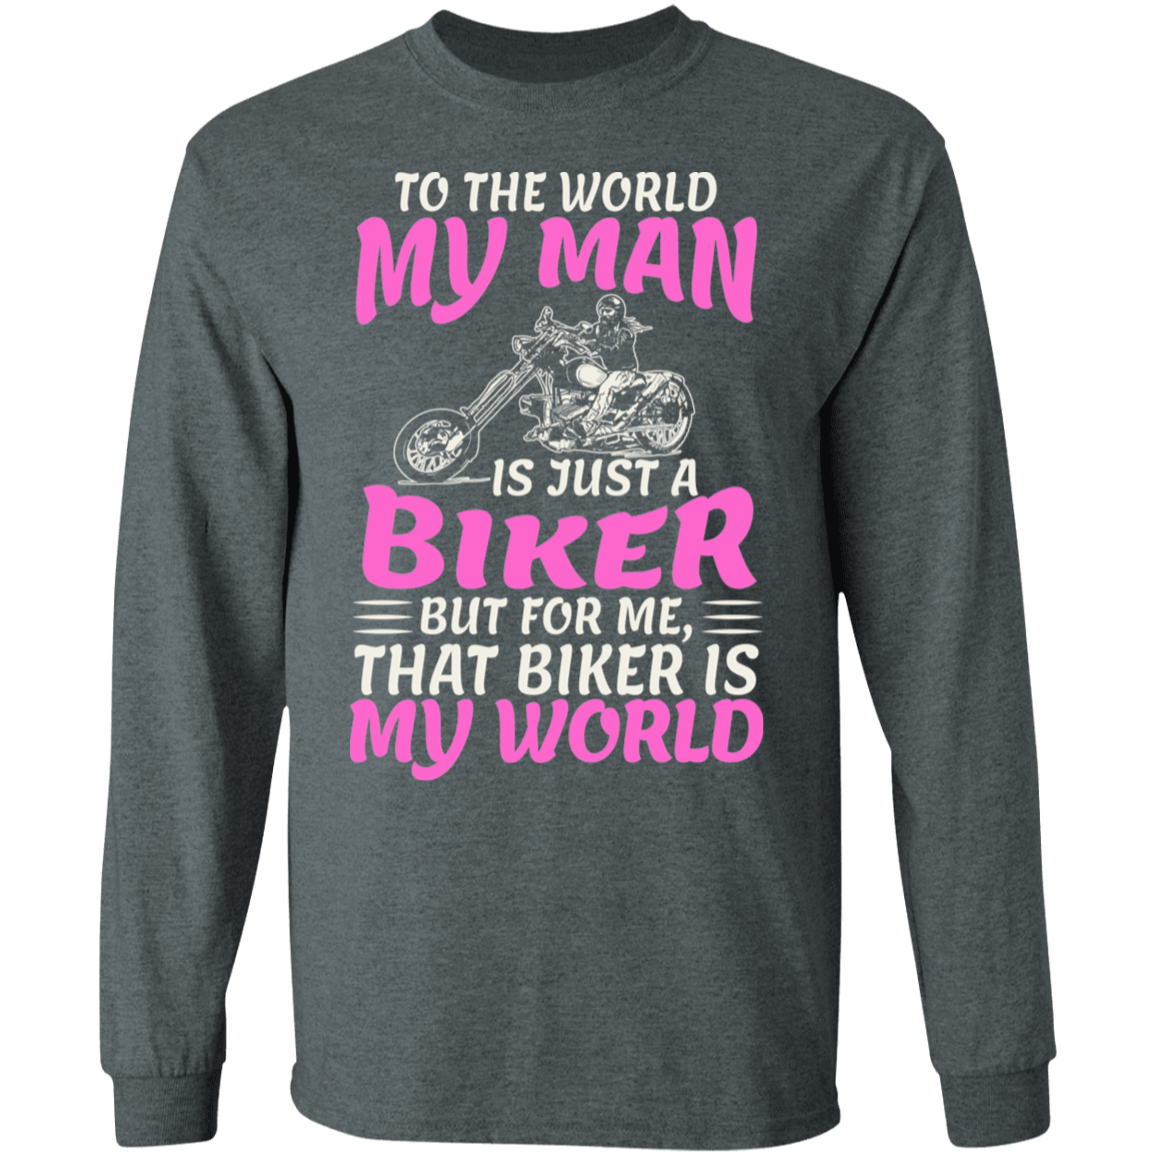 That biker is my world Shirt